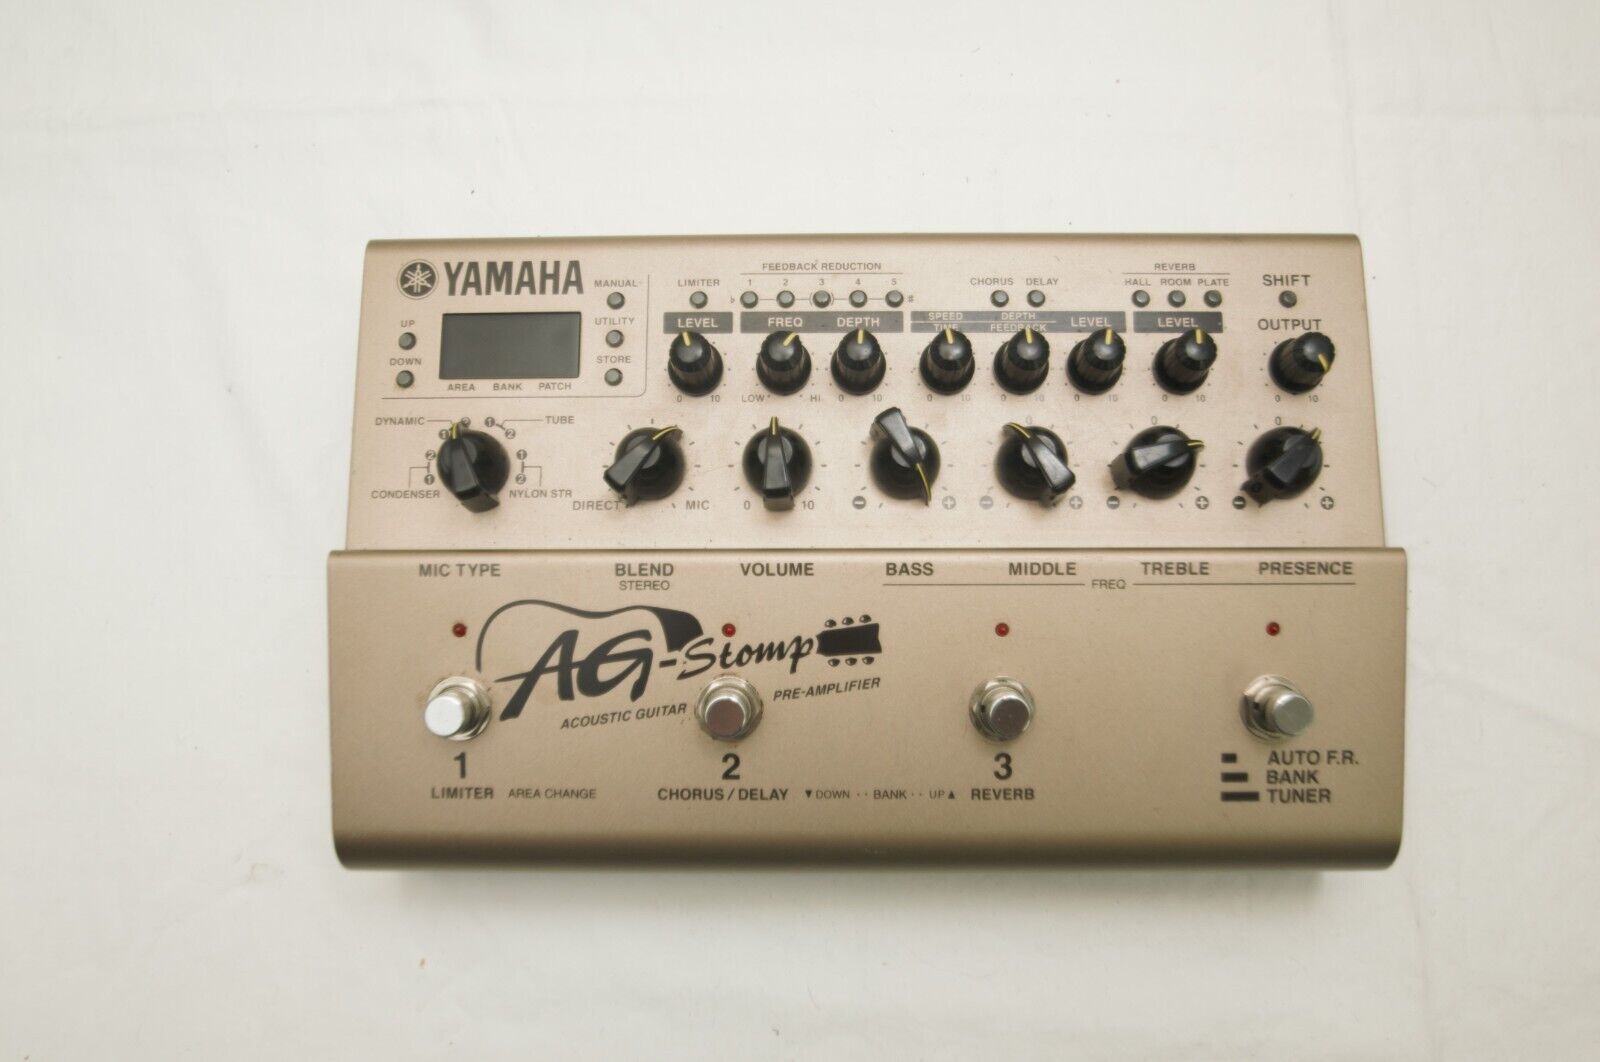 Yamaha Acoustic Guitar Eletronic Pre-Amp Pedal - AG Gold Stomp Pedal